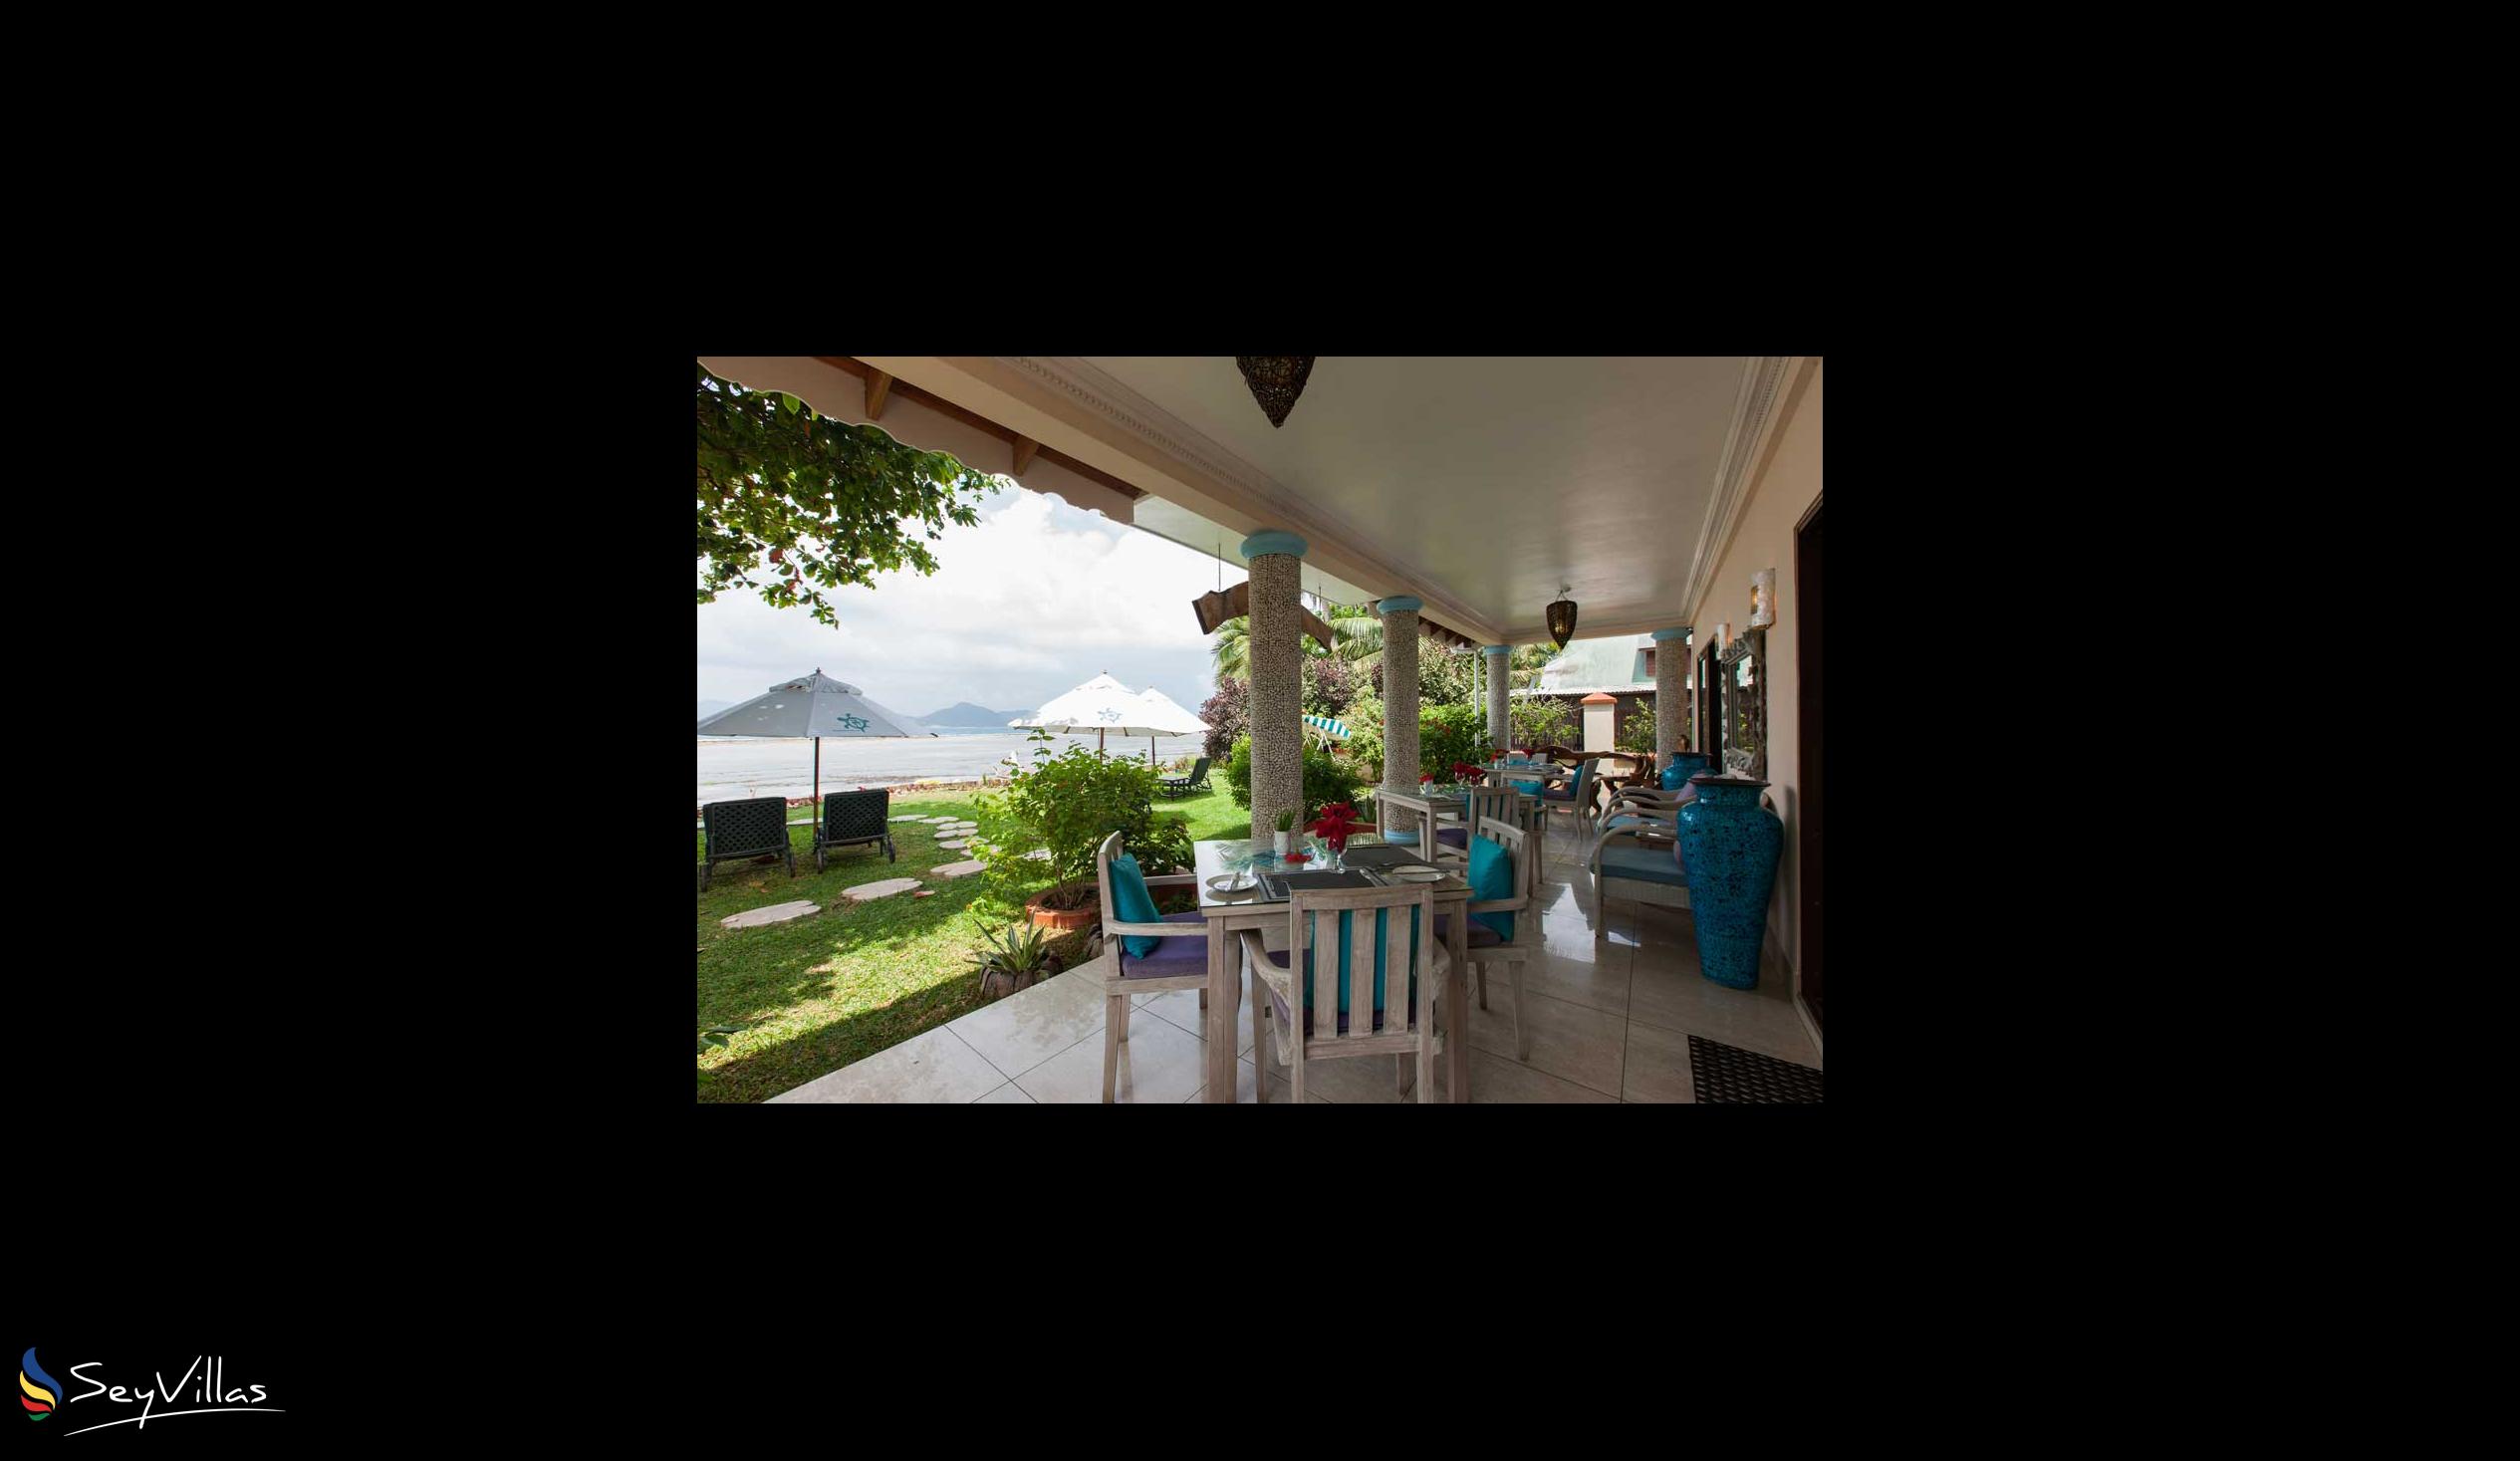 Foto 6: Le Relax Beach House - Innenbereich - La Digue (Seychellen)